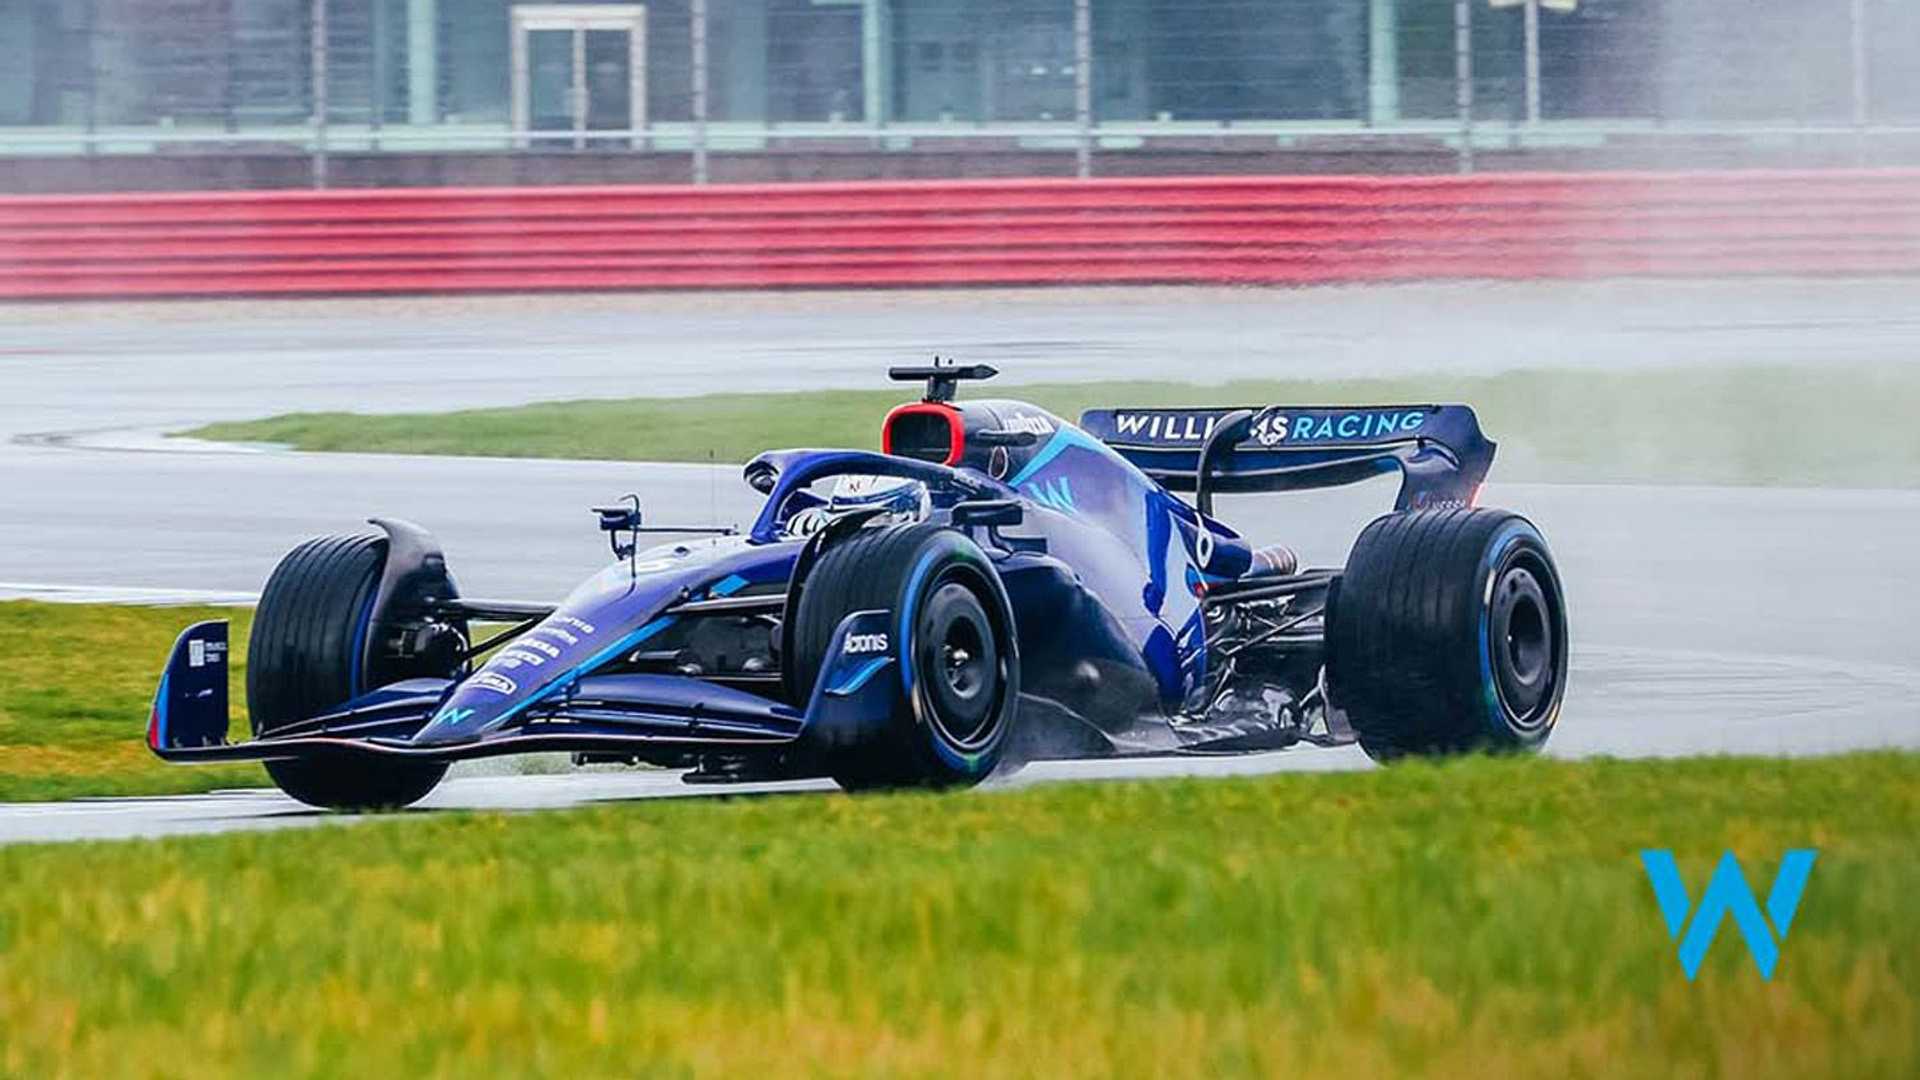 F1 2022 car run highlights visibility concerns, say Williams duo